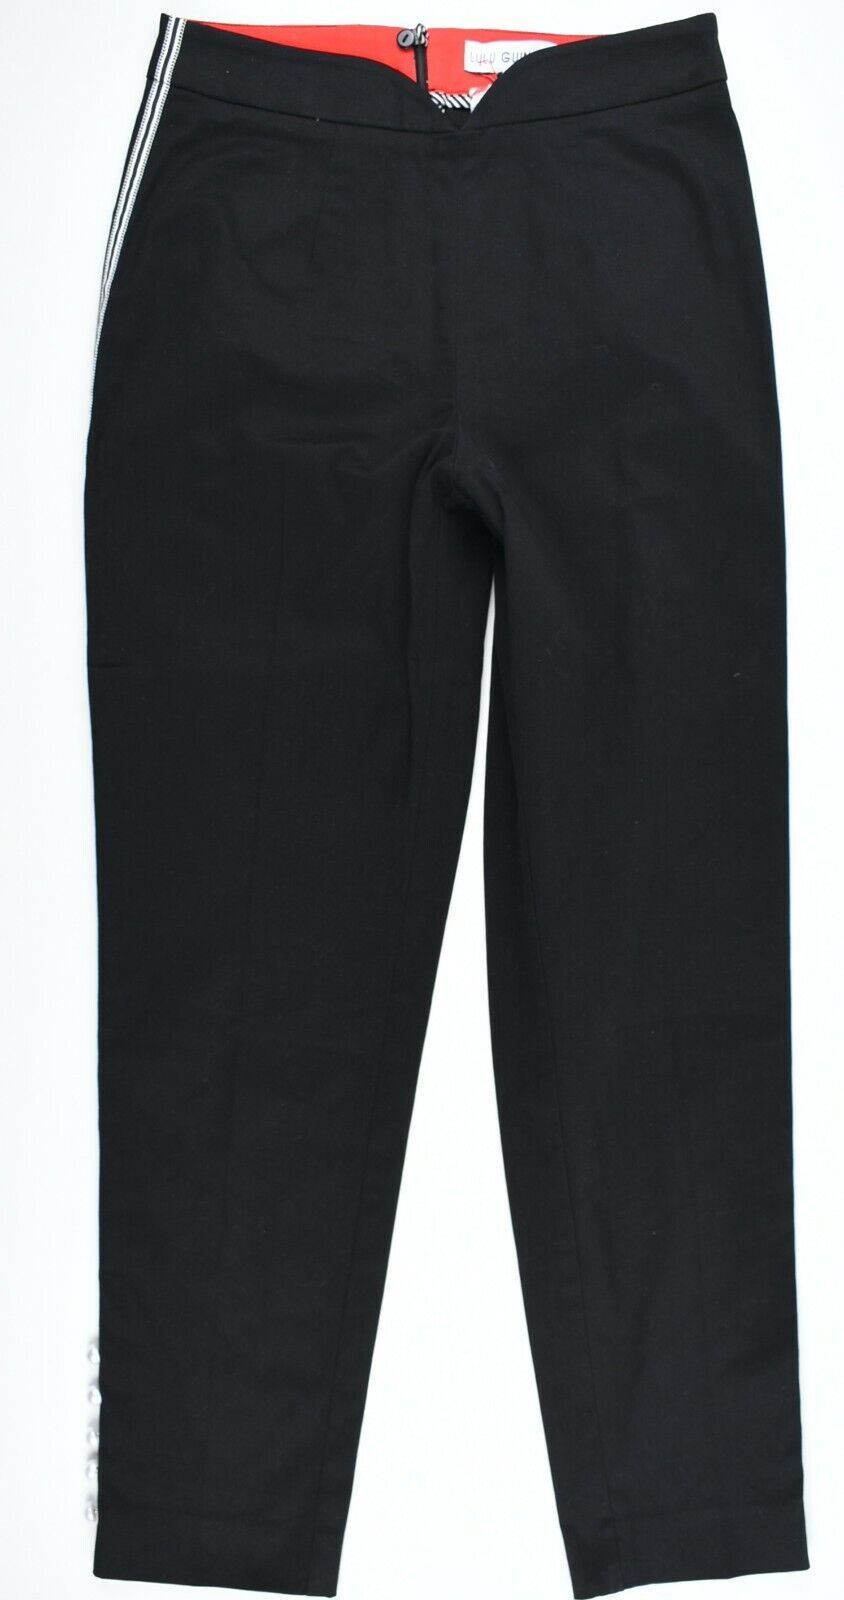 LULU GUINESS Women's TONI Trousers Pants, Black, size UK 8